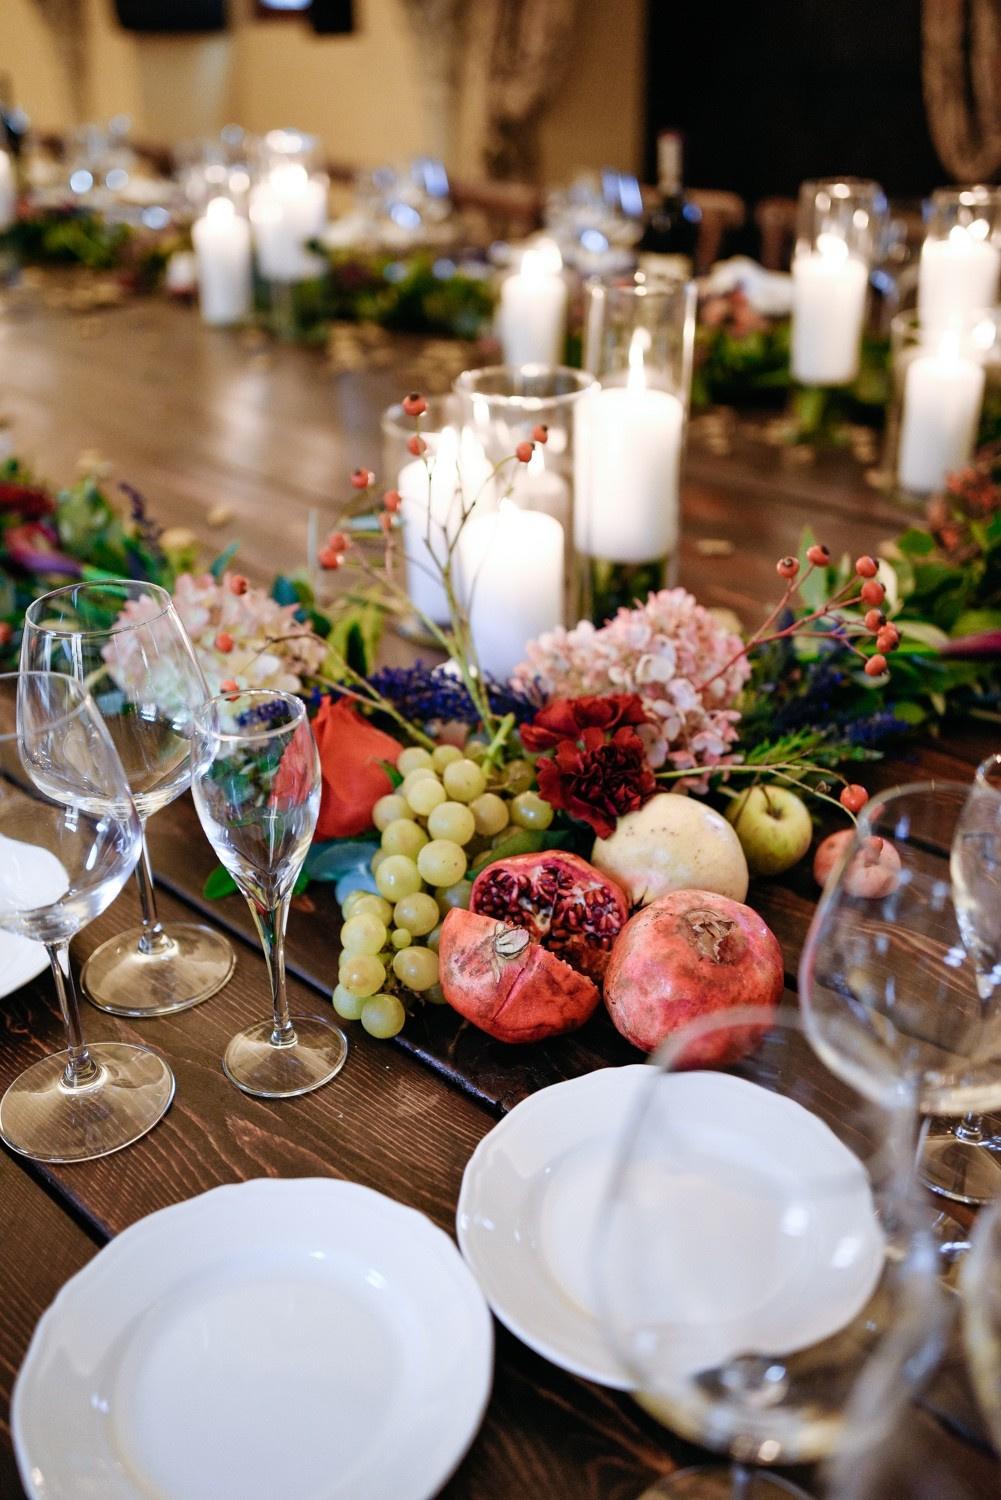 30 Unique Fall Wedding Ideas for Your Autumn Celebration